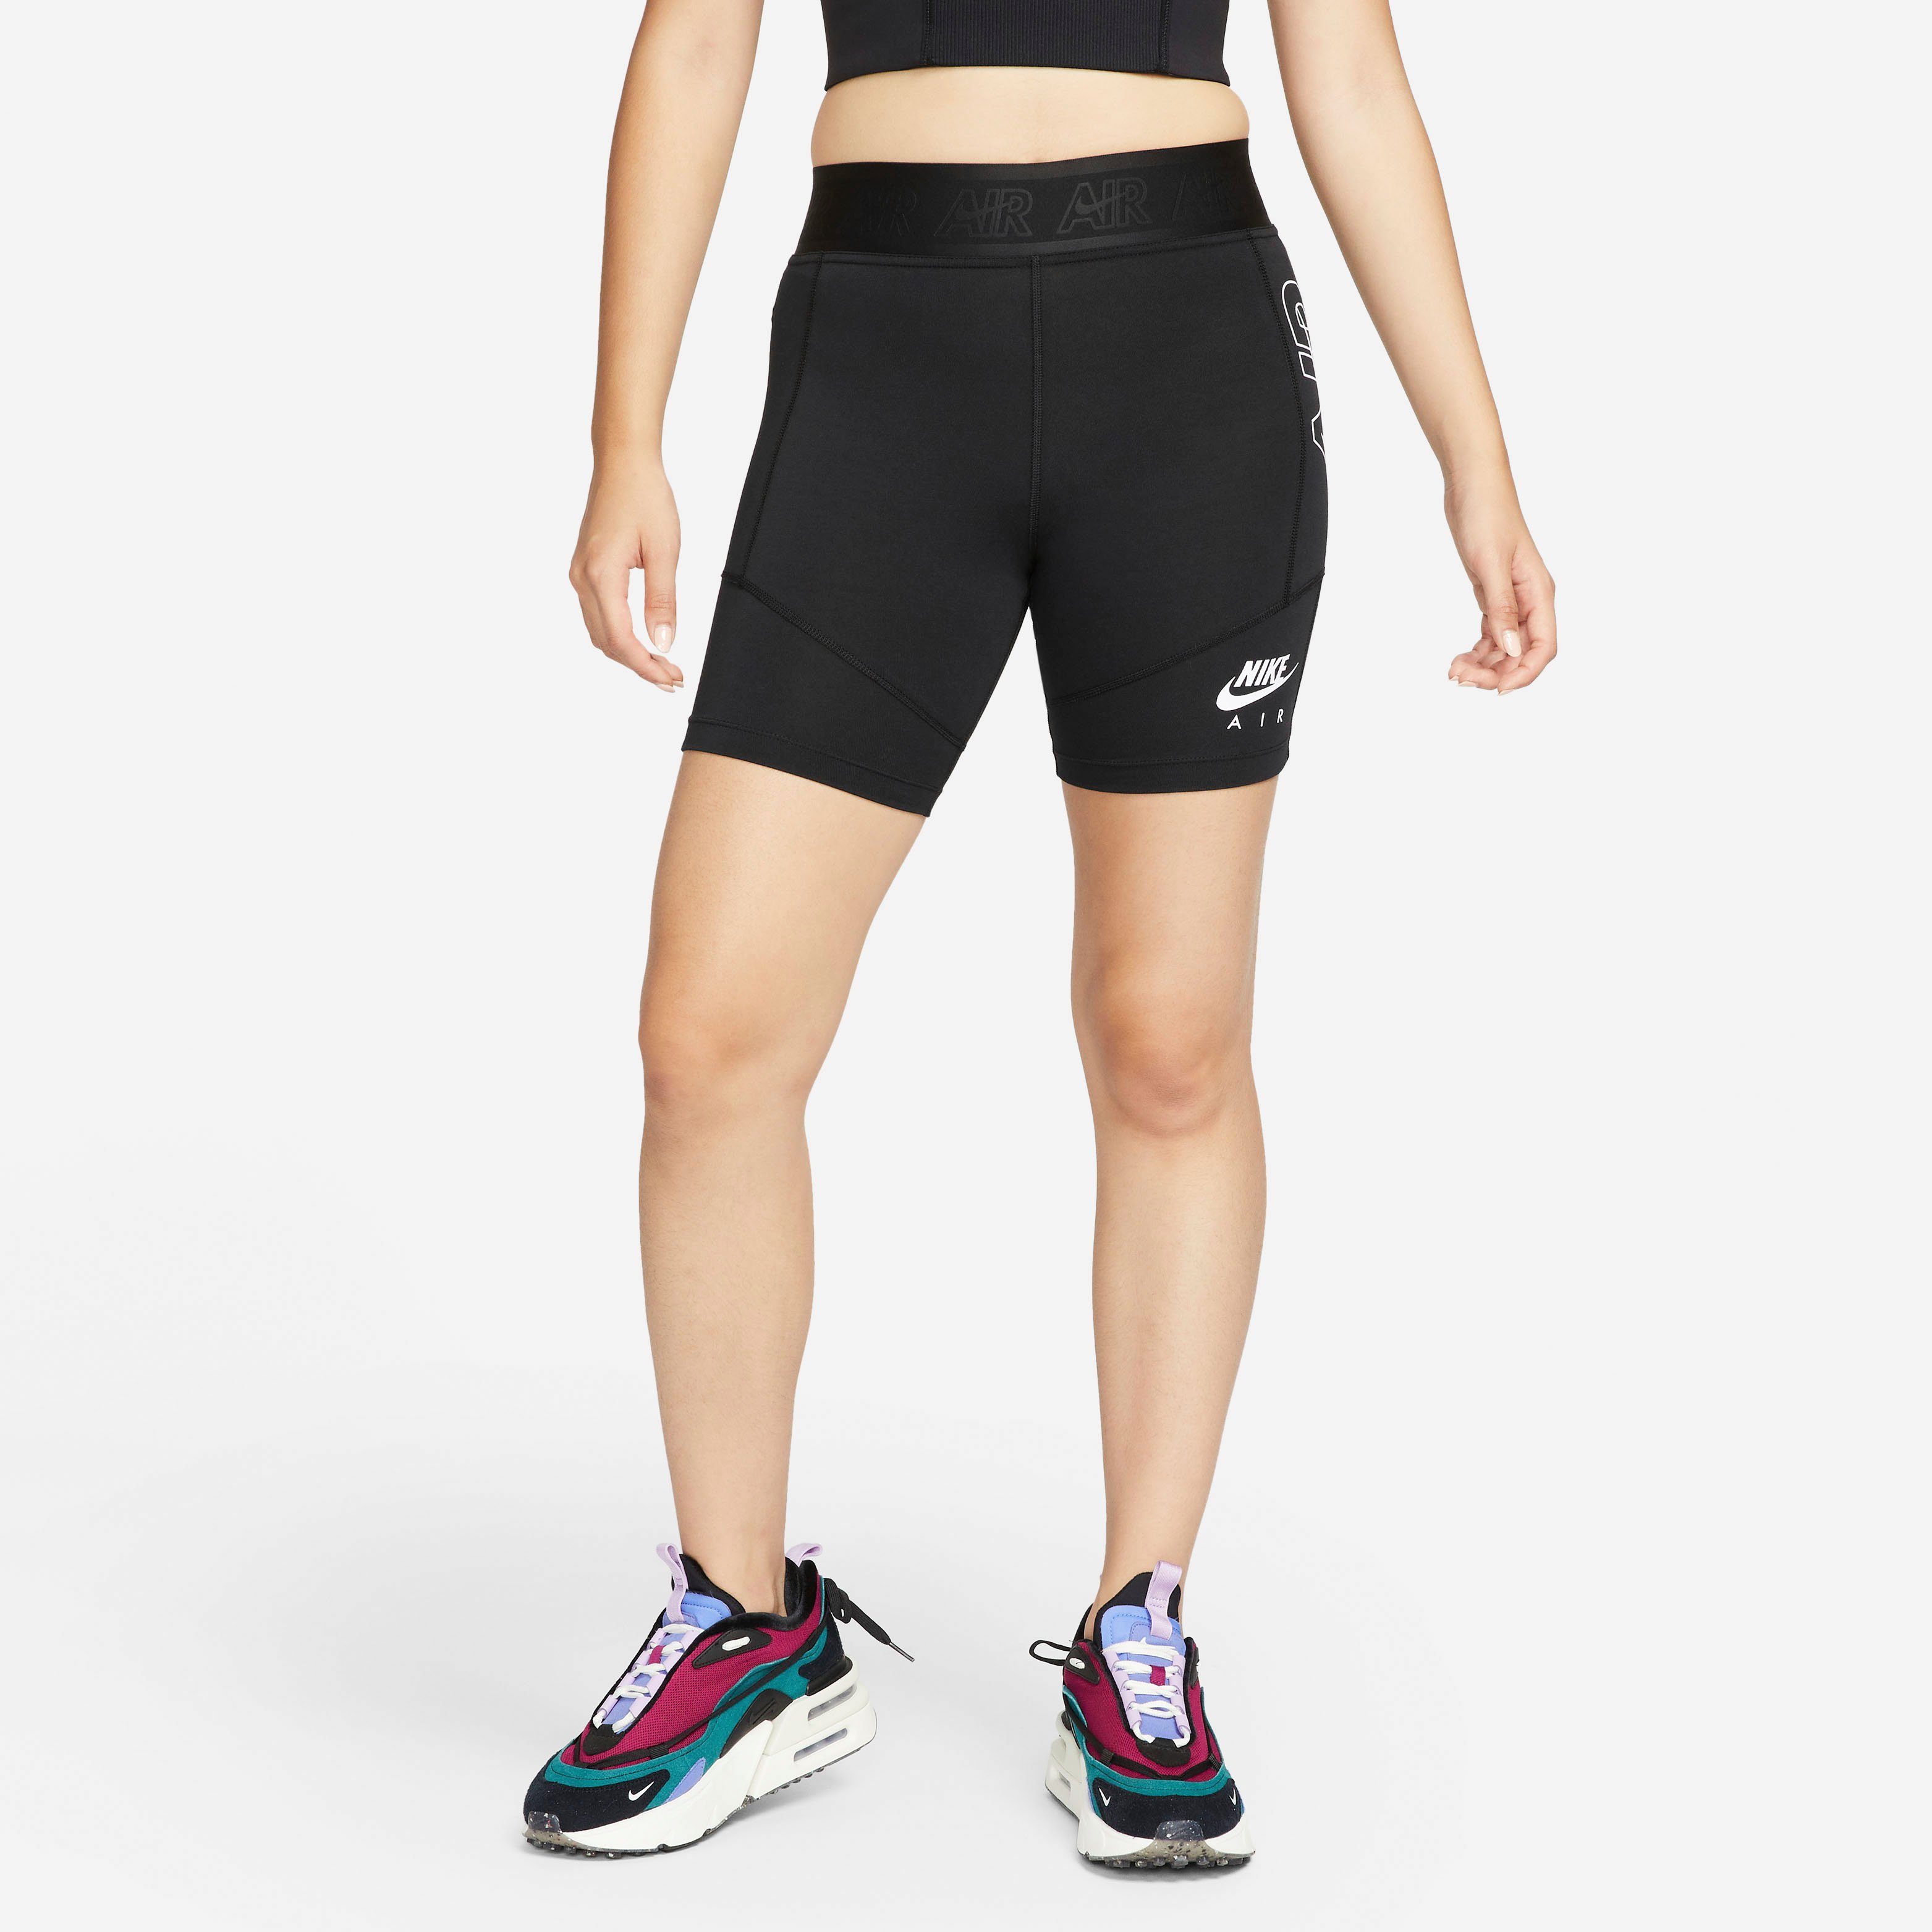 Nike Kurze Hose Damen online kaufen | OTTO